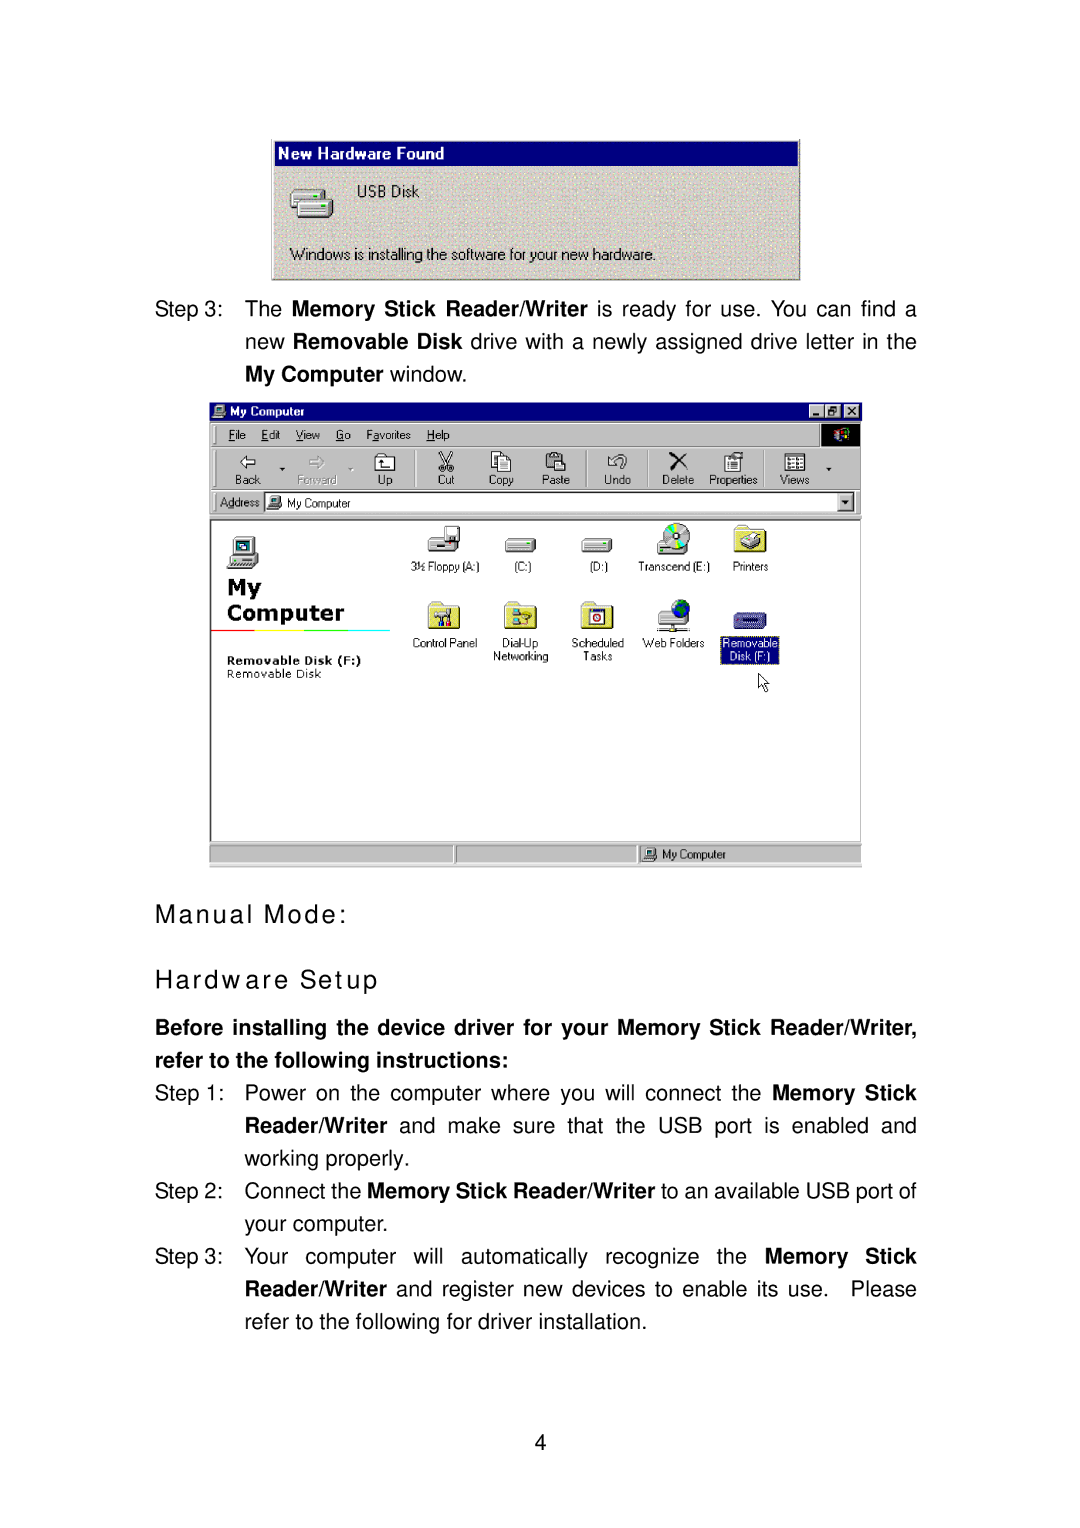 Transcend Information Memory Stick Reader/Writer user manual Manual Mode Hardware Setup 